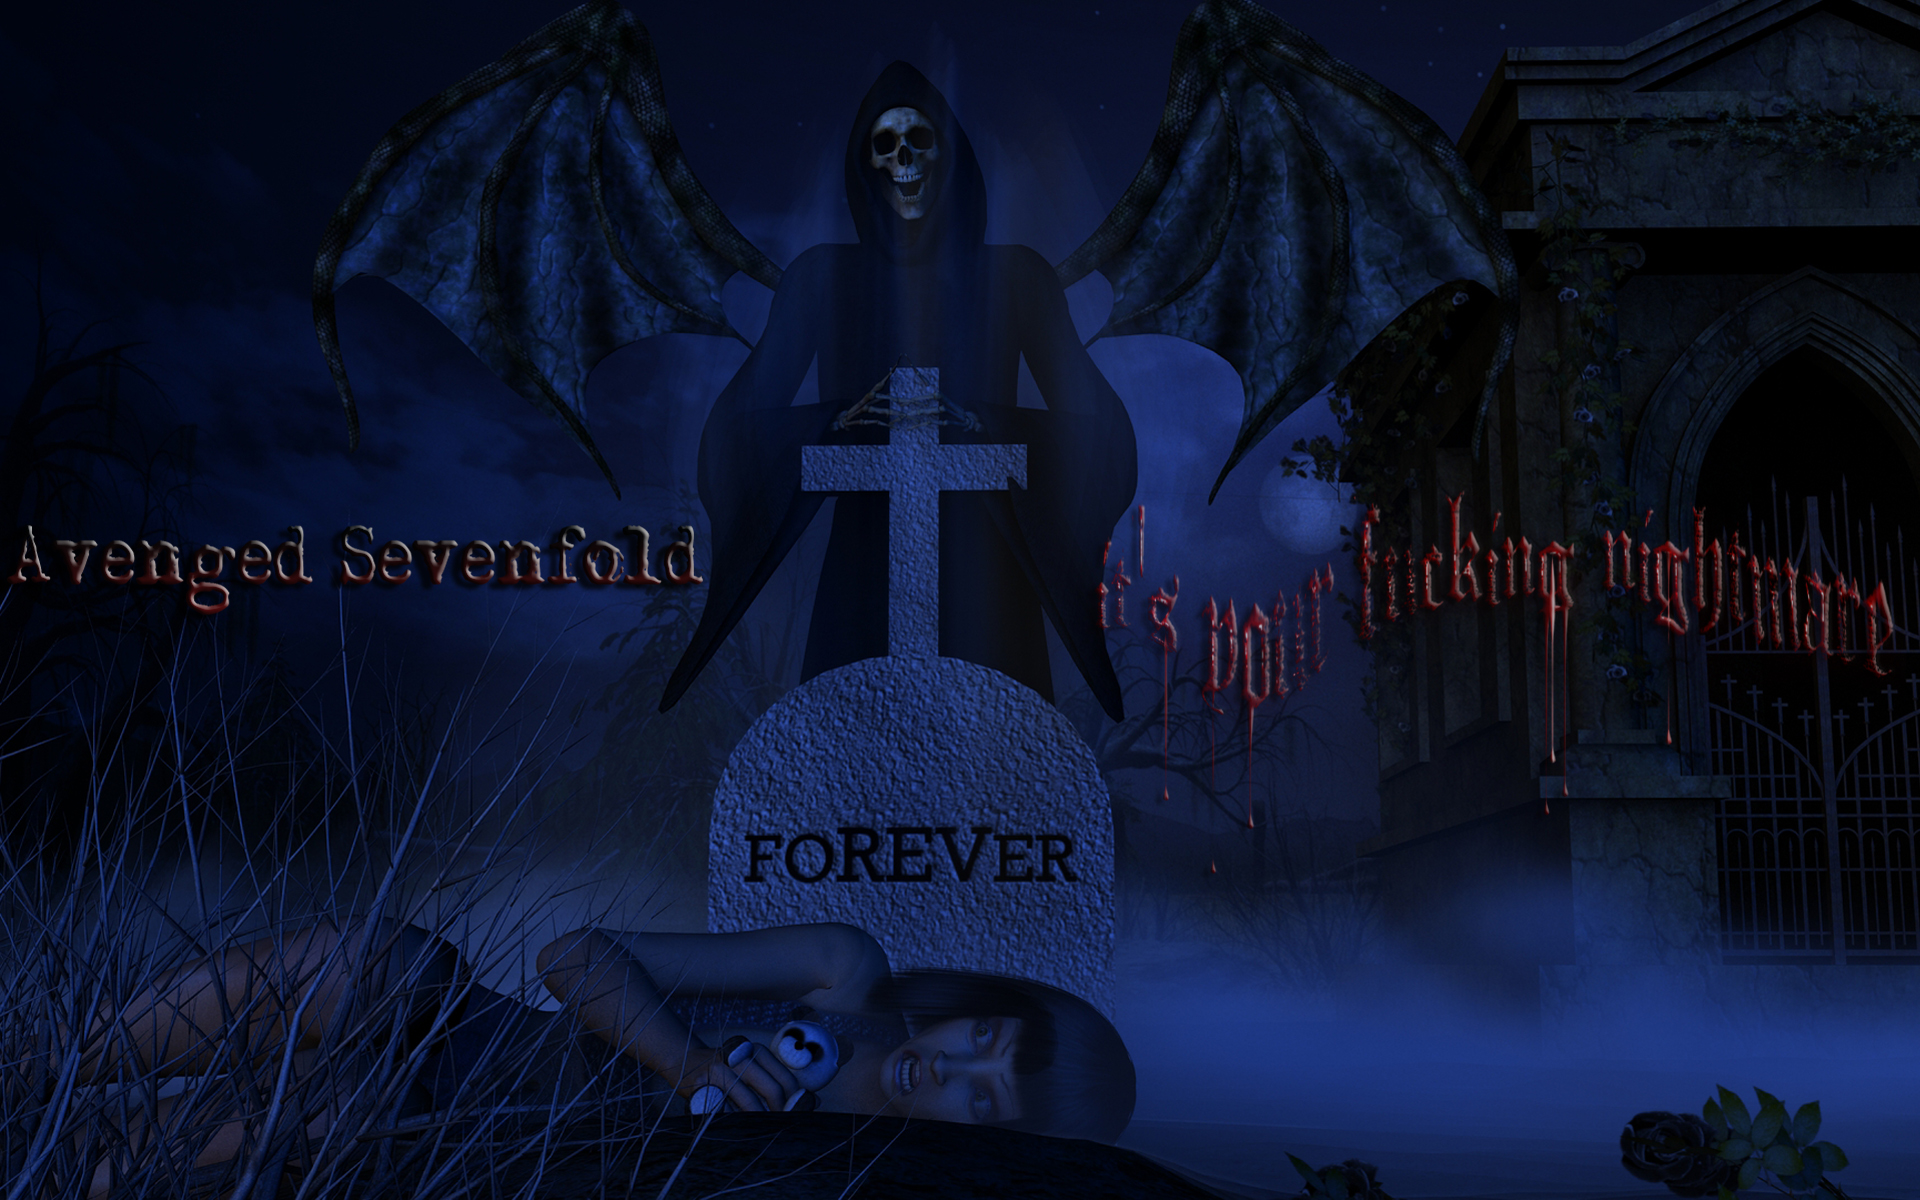 Avenged Sevenfold Puter Wallpaper Desktop Background